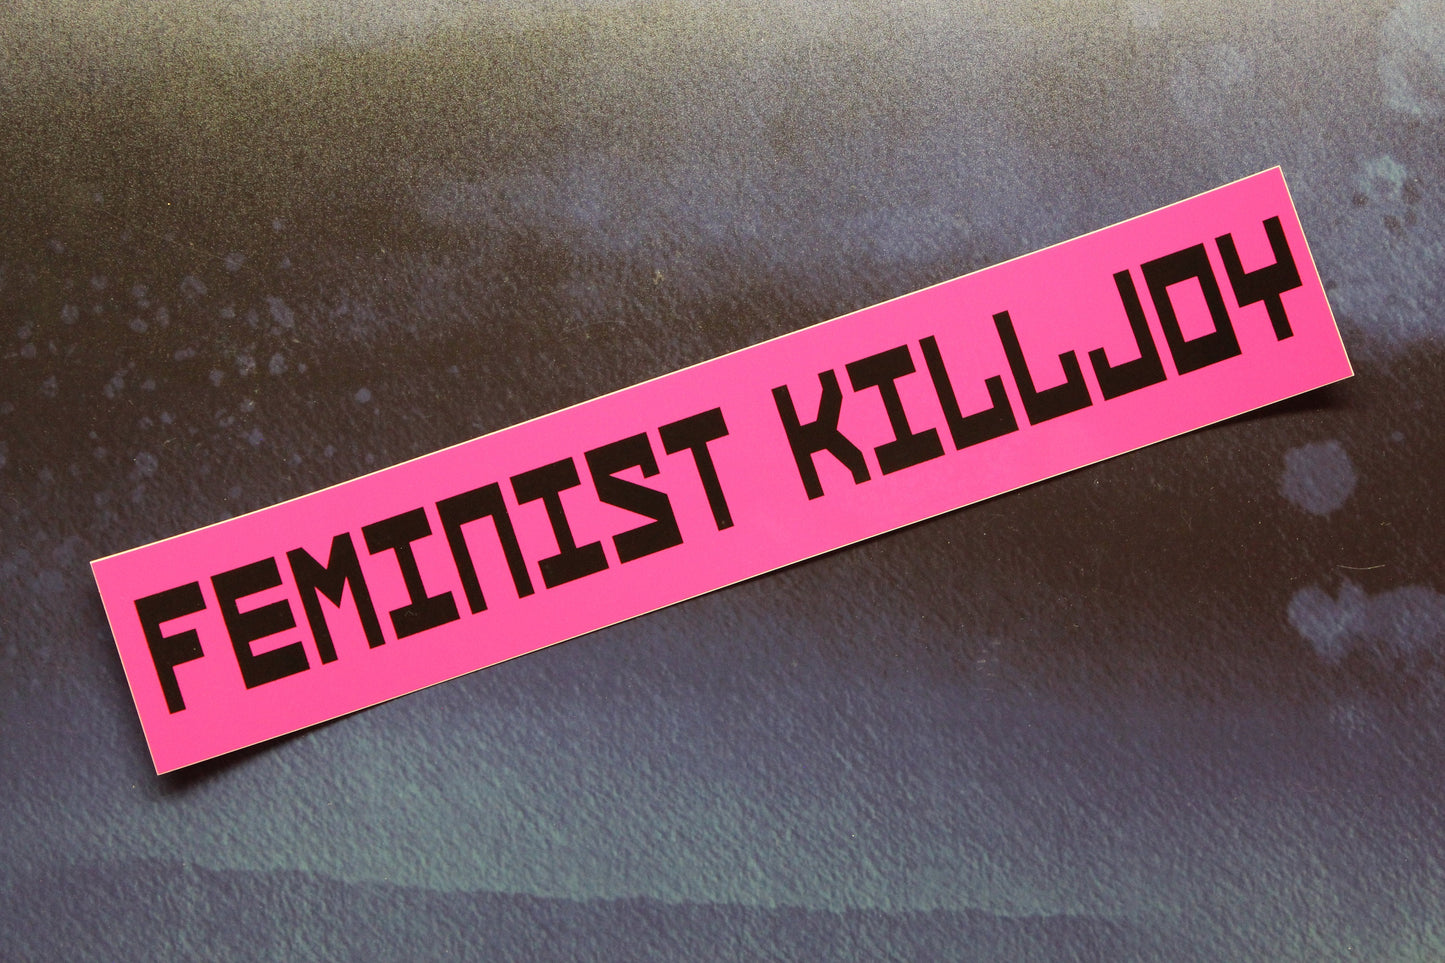 Feminist Killjoy Vinyl Decal Bumper Sticker Car Laptop Bike Guitar Resist Resistance Feminism